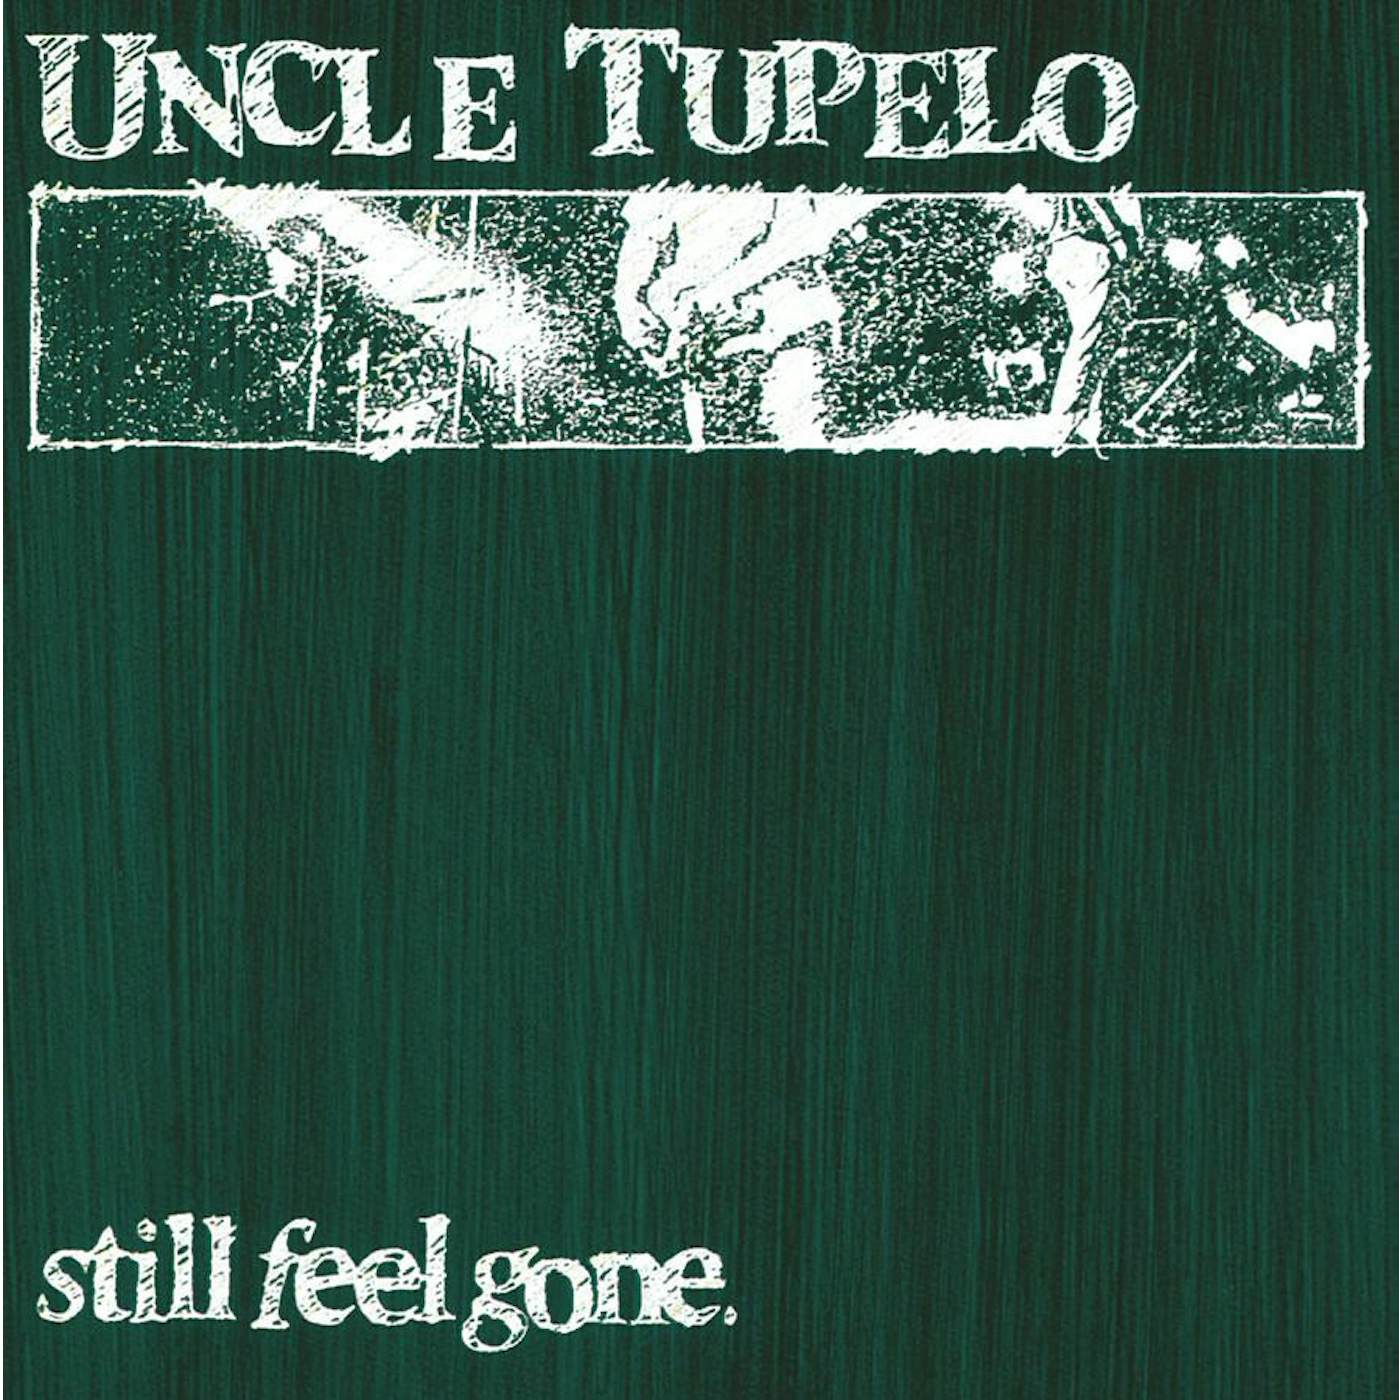 Uncle Tupelo Still Feel Gone Vinyl Record